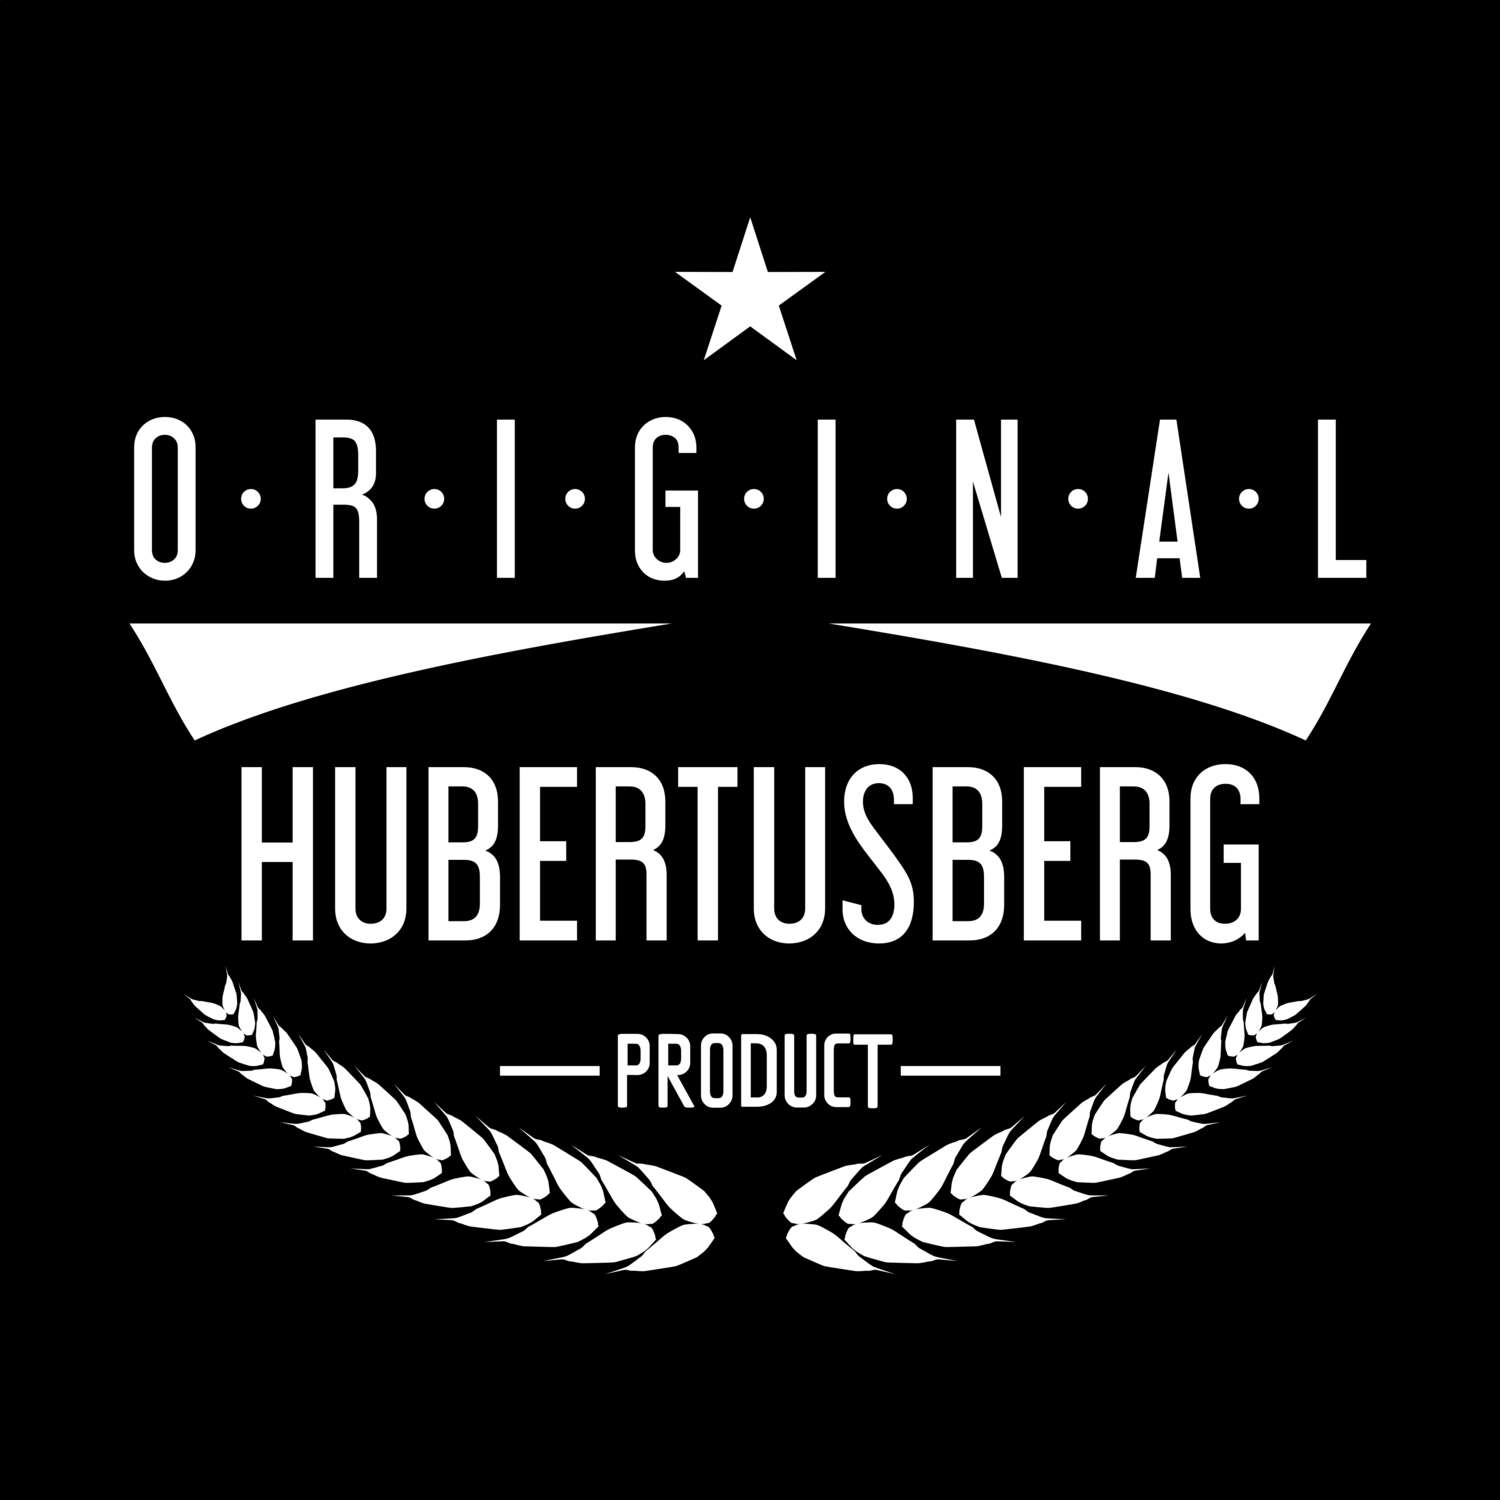 Hubertusberg T-Shirt »Original Product«